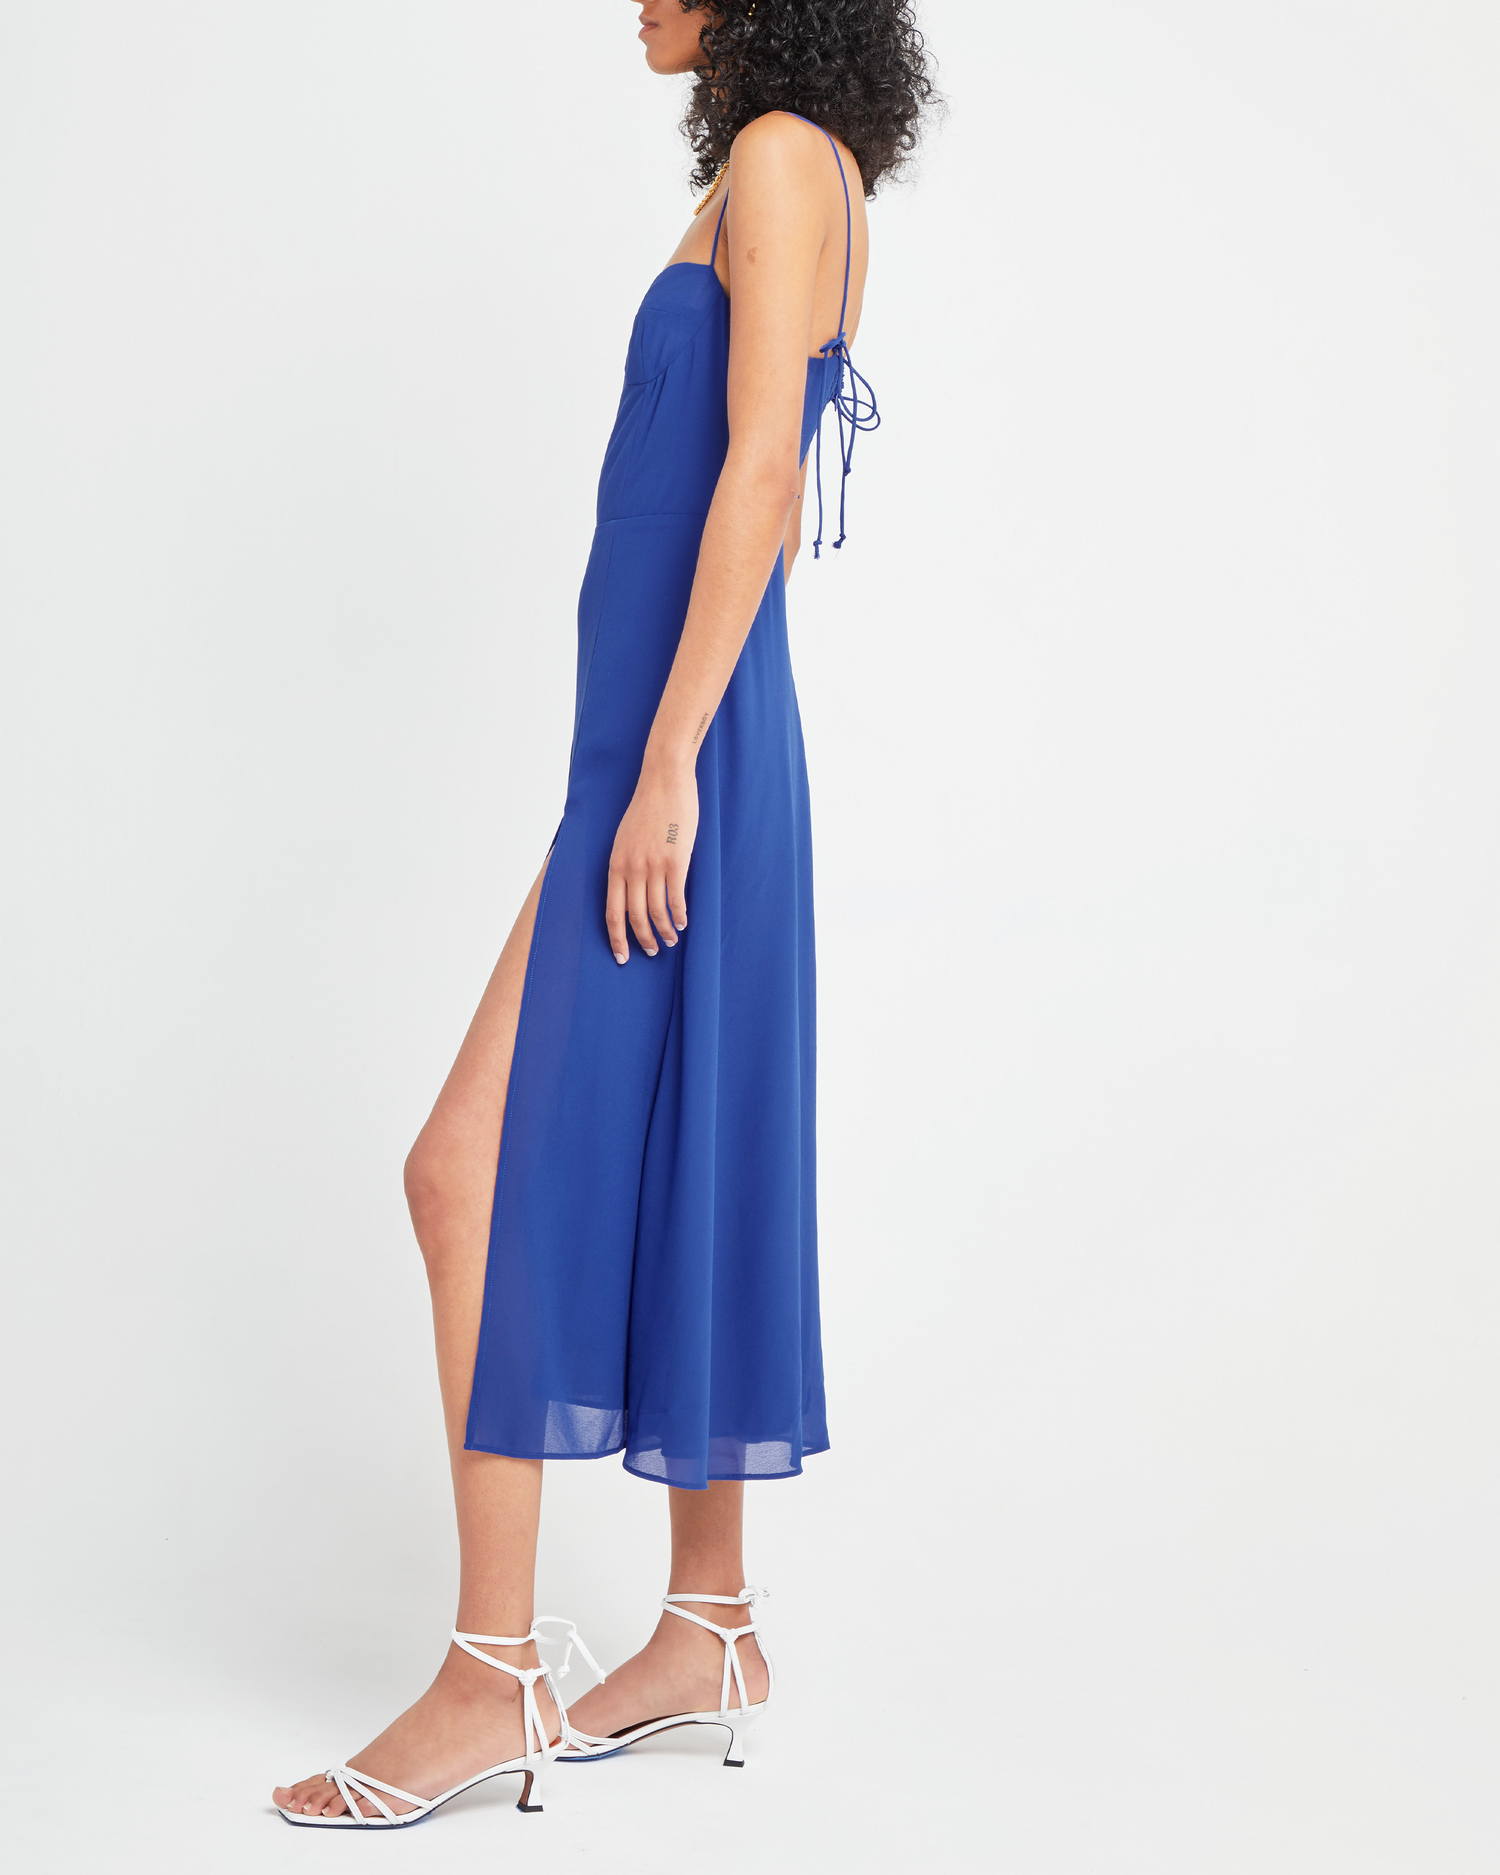 Third image of Venus Dress, a blue midi dress, tie straps, spaghetti straps, side slit, bodice